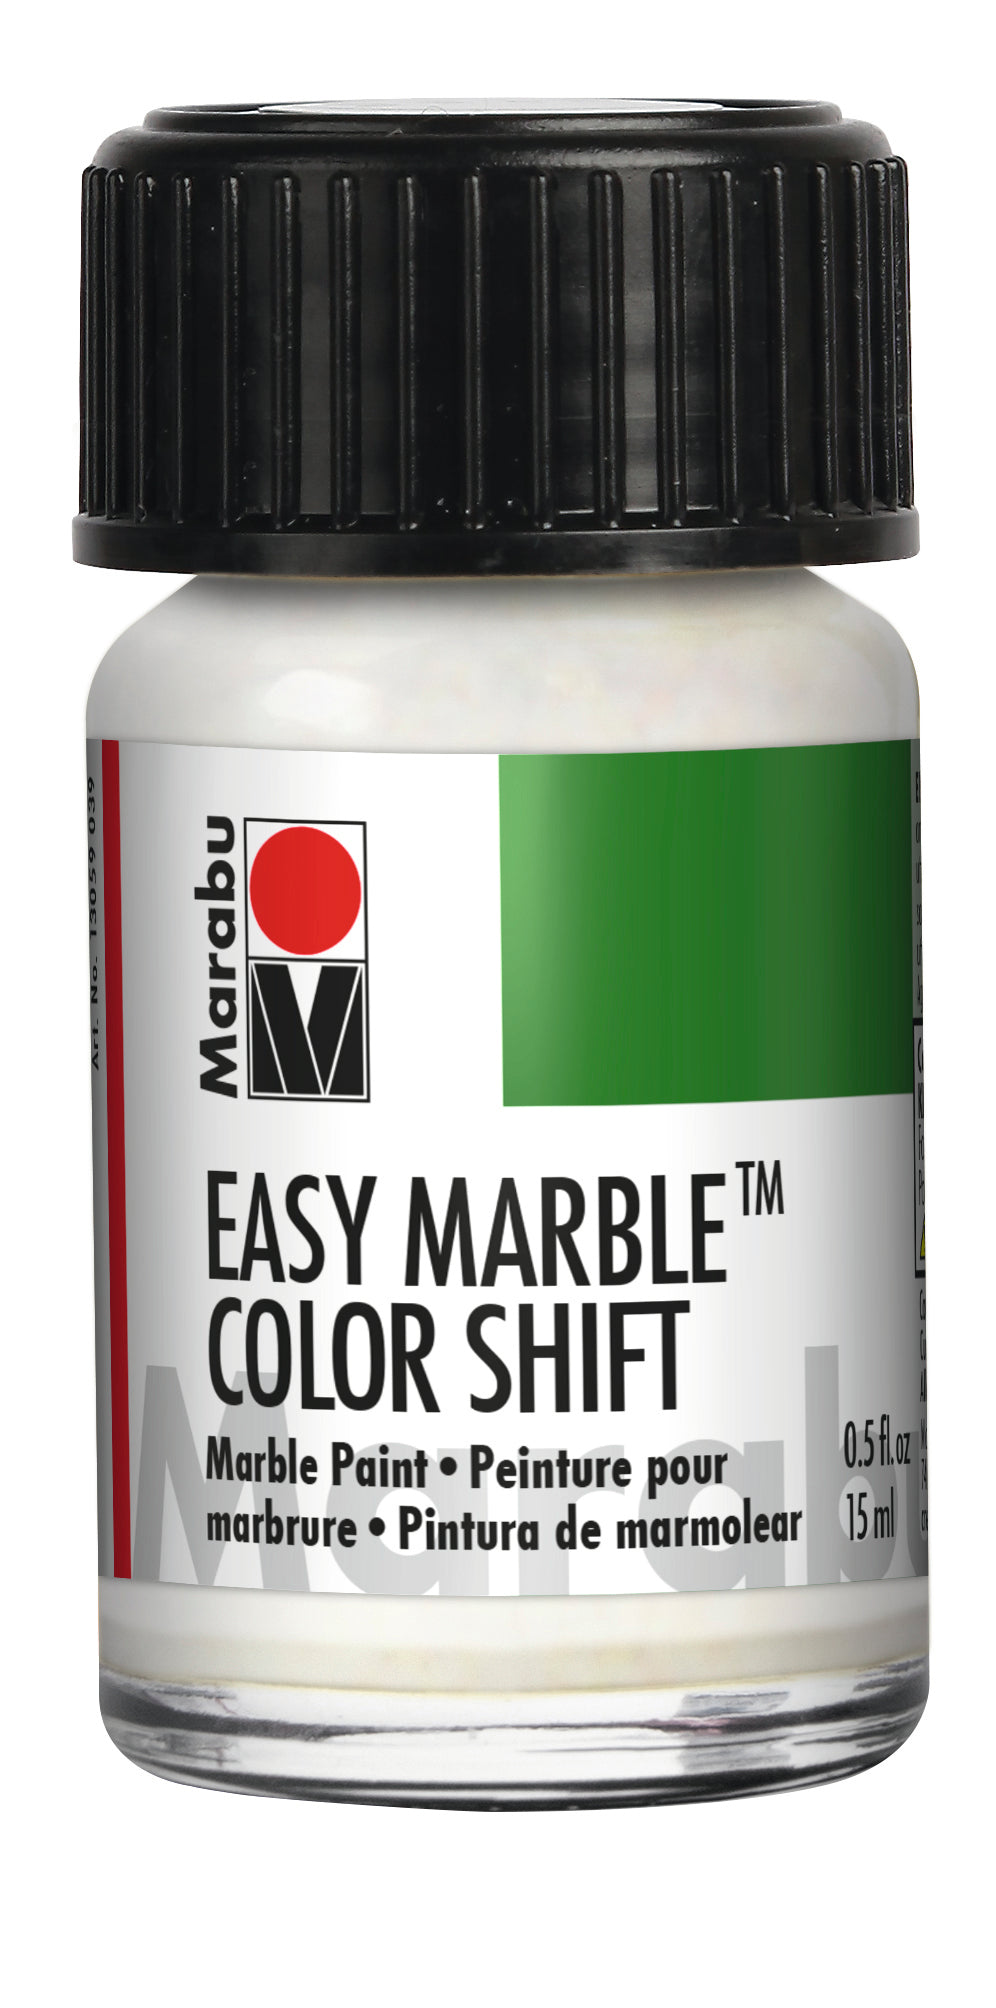 Metallic Teal/Silver/Red Marabu Easy Marble 730